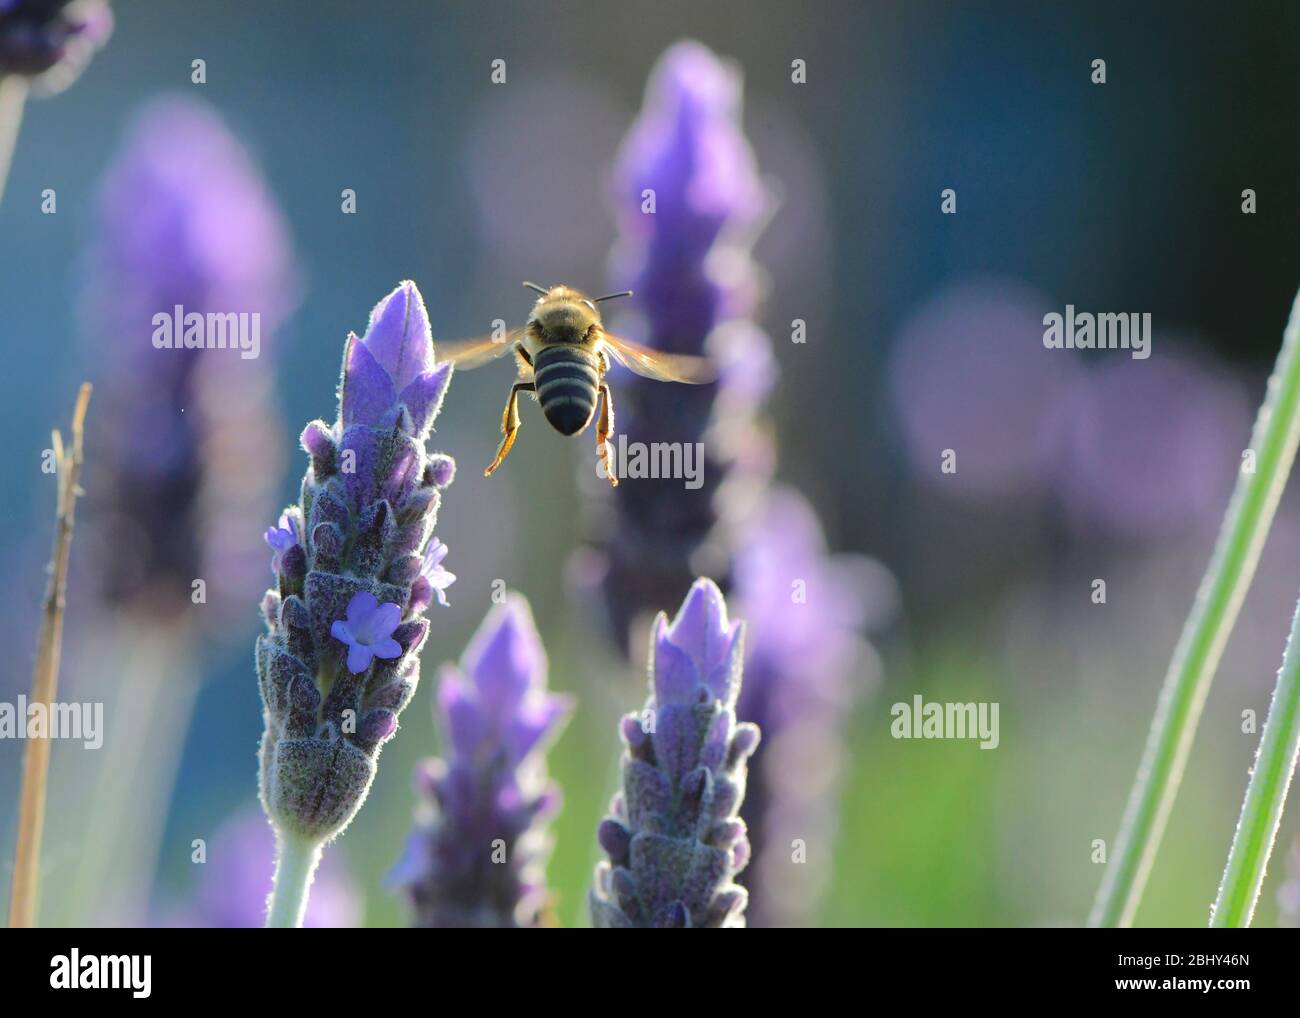 Bee in flight over lavendar blossoms Stock Photo